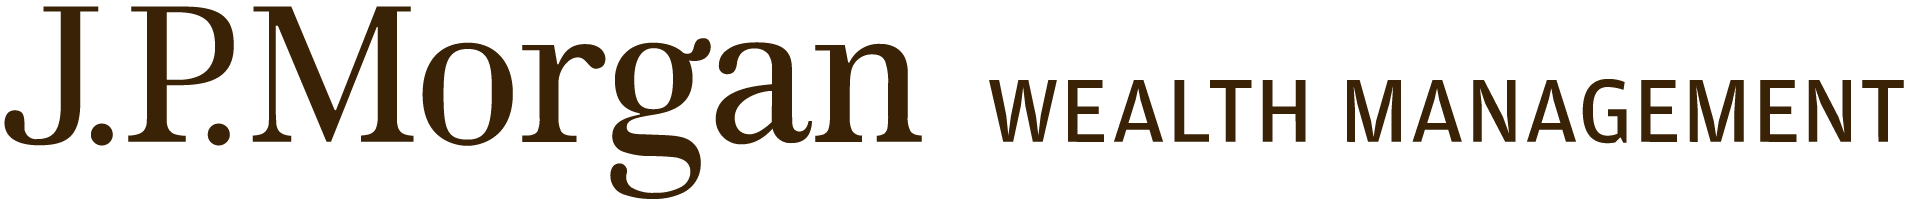 J.P. Morgan Wealth Management Logo